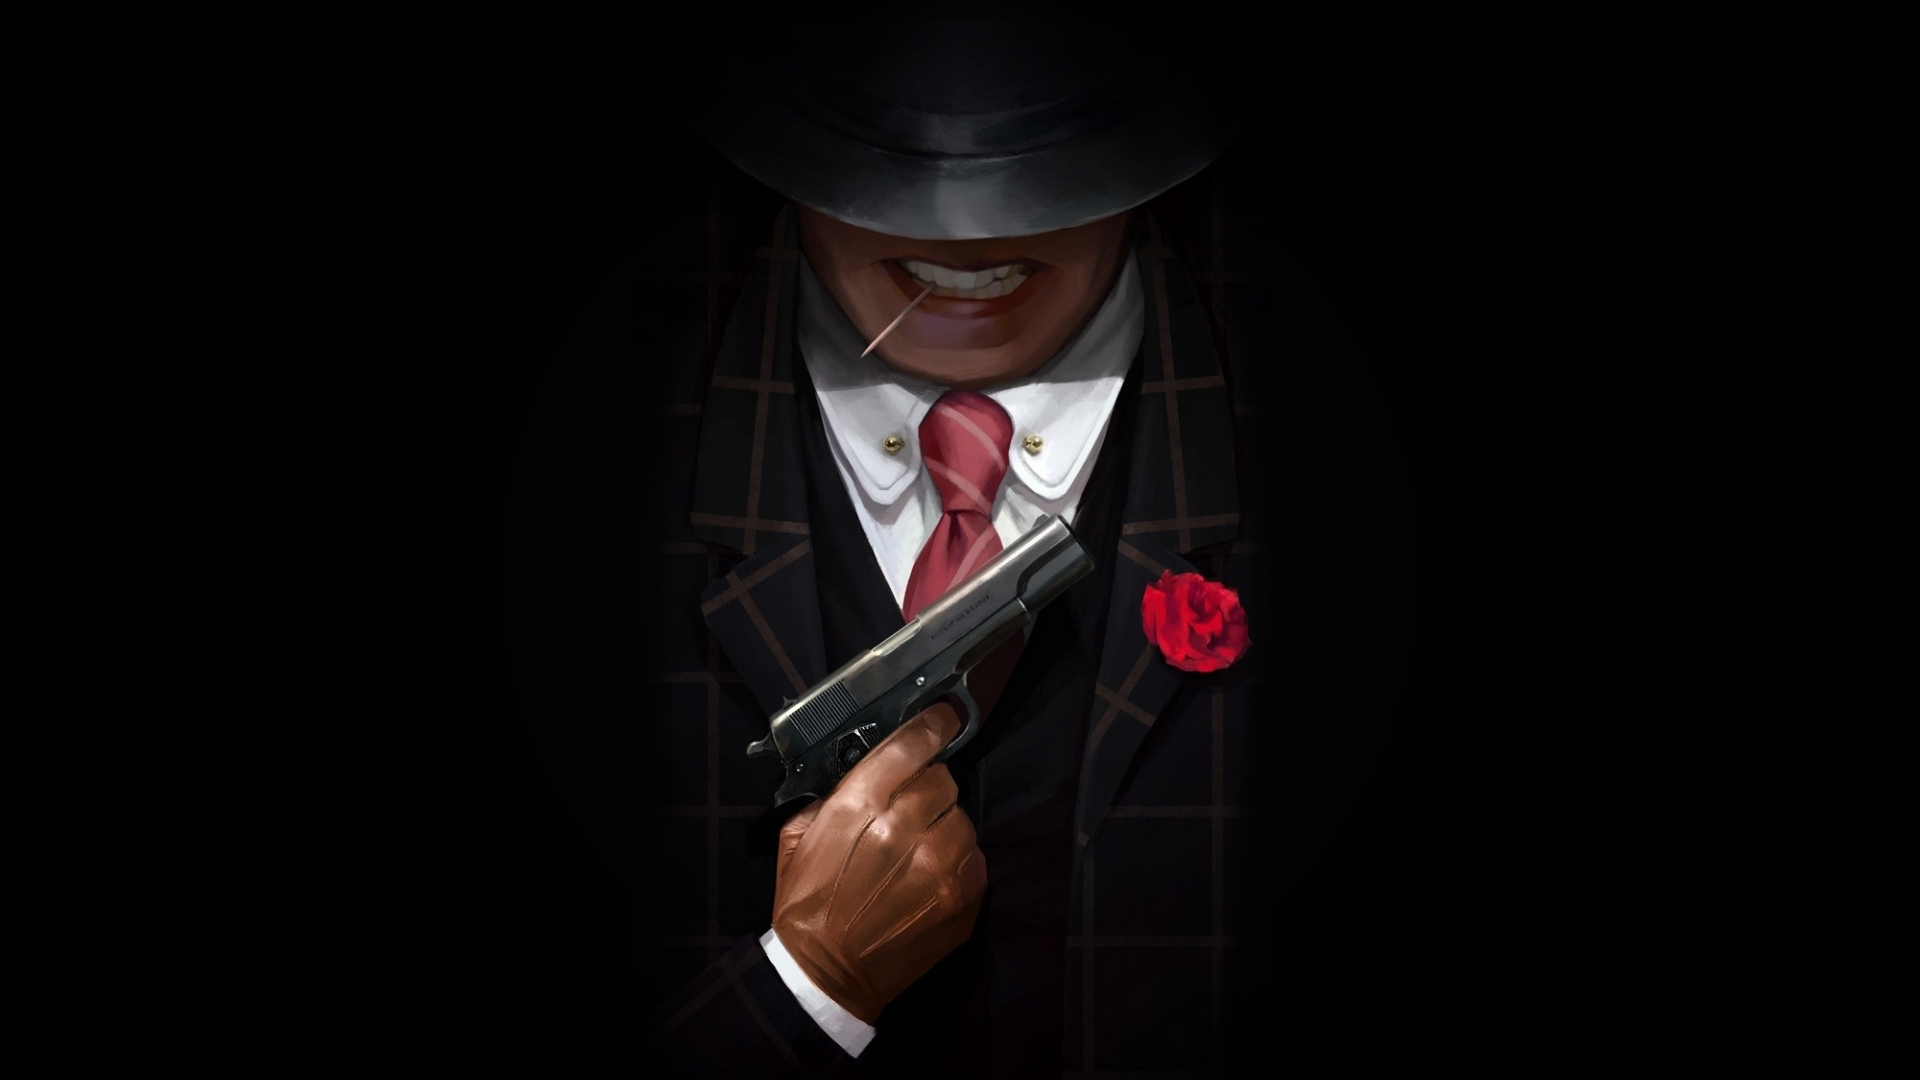 Download Wallpaper 1920x1080 Gangster With Gun Minimal Artwork Full